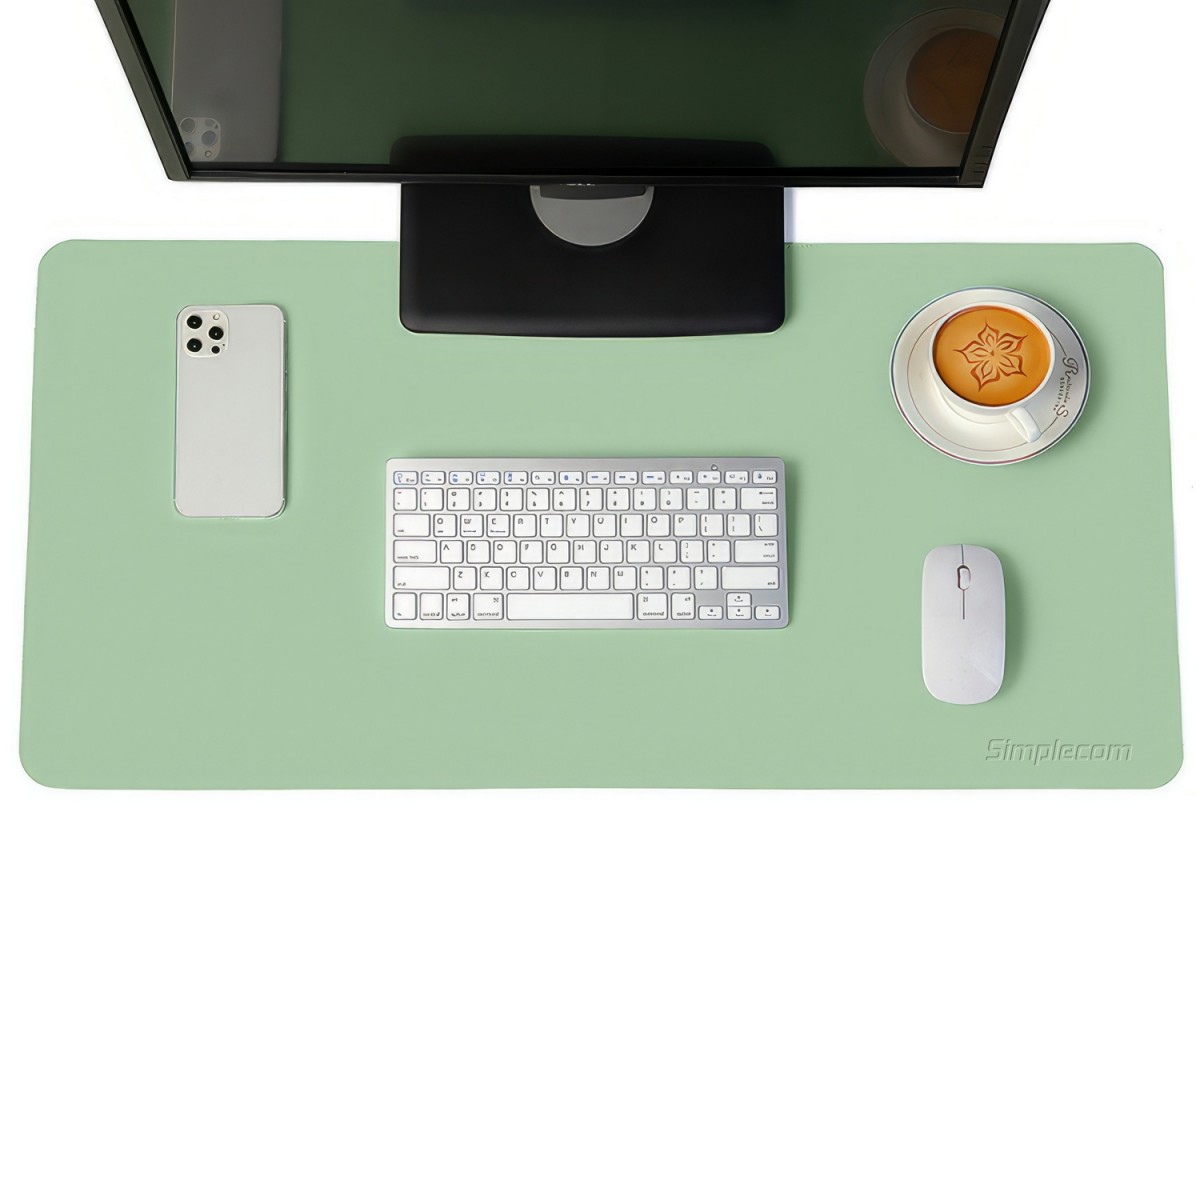  Desk Mouse Pad Non-Slip PU Leather 80x40cm - Green  